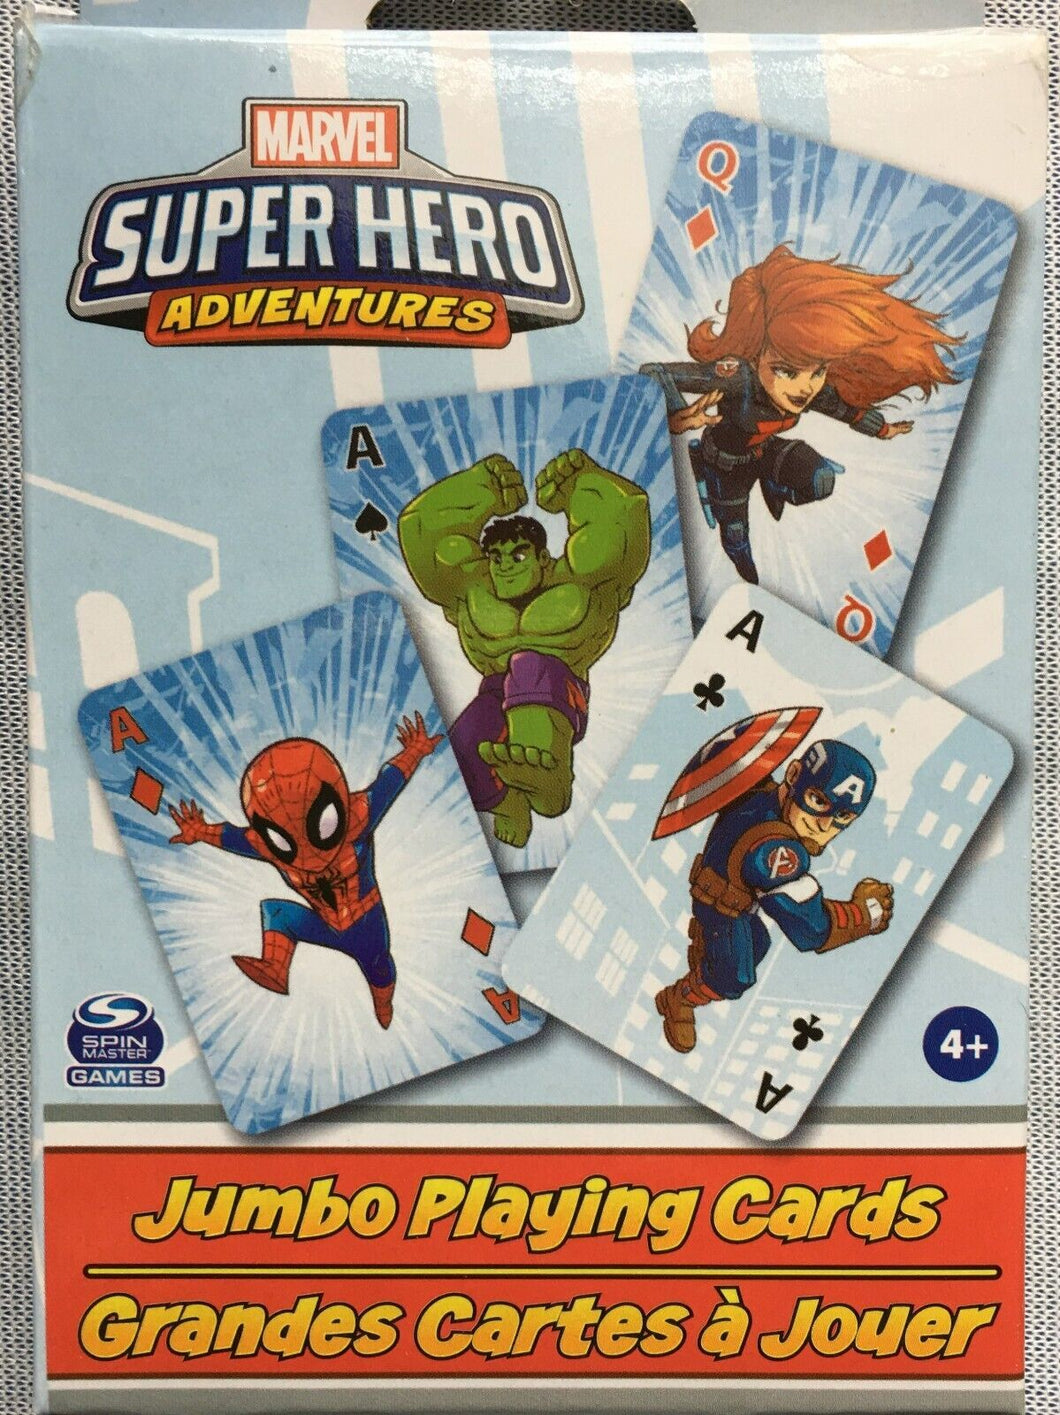 Marvel Super Hero Adventures - Jumbo Playing Cards